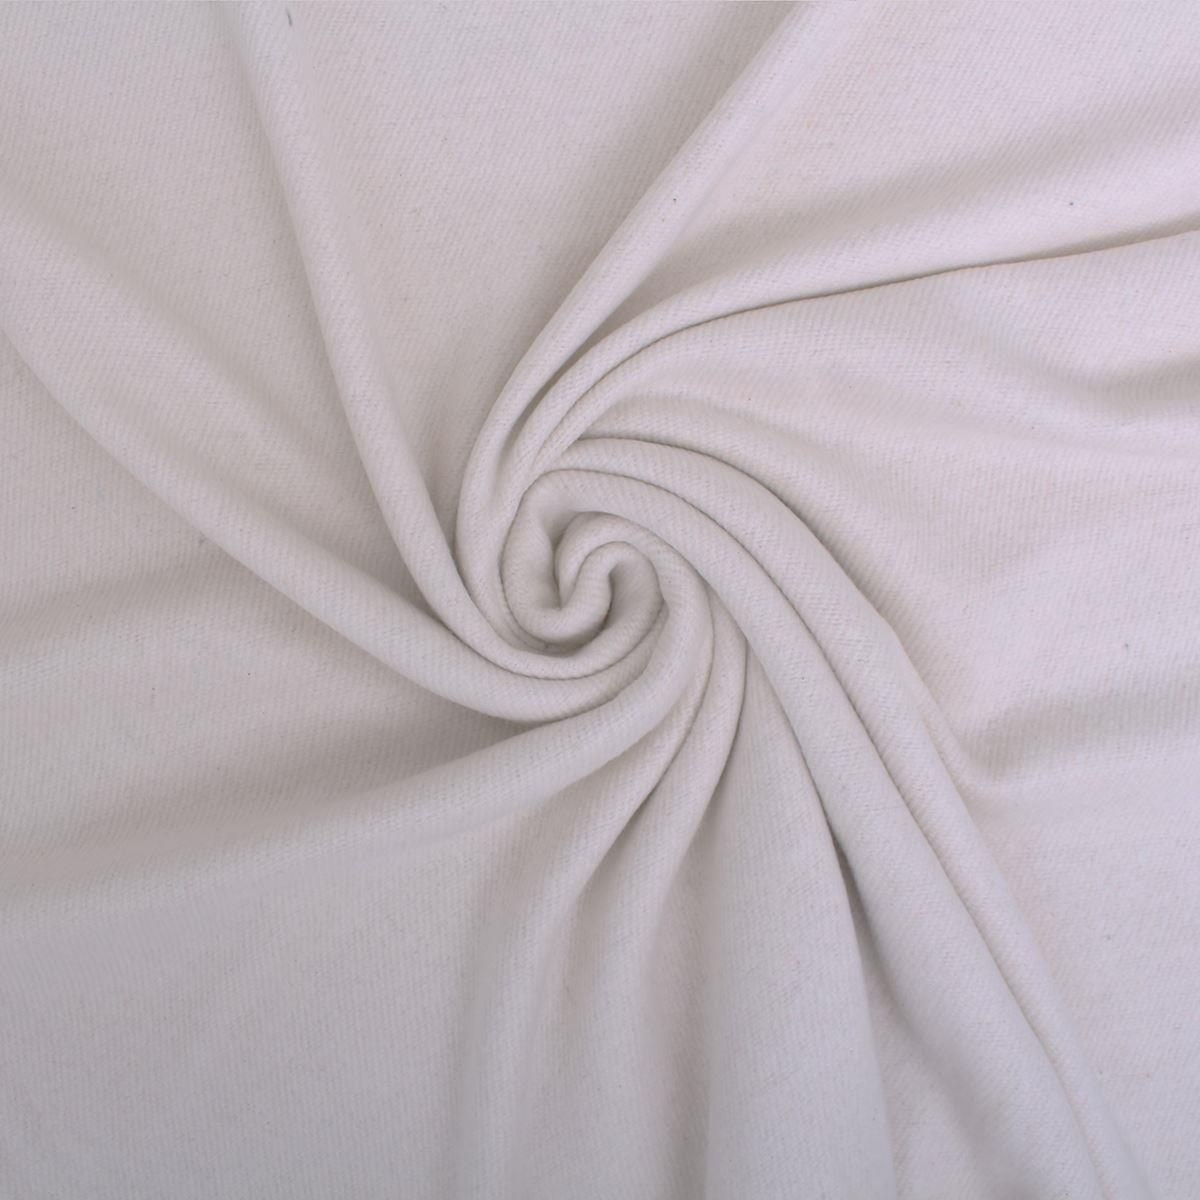 1*pcs 50*50cm Single Face Adhesive Fabric Lining Cotton Batting Filler  Patchwork Quilting Craft DIY Craft Interlining